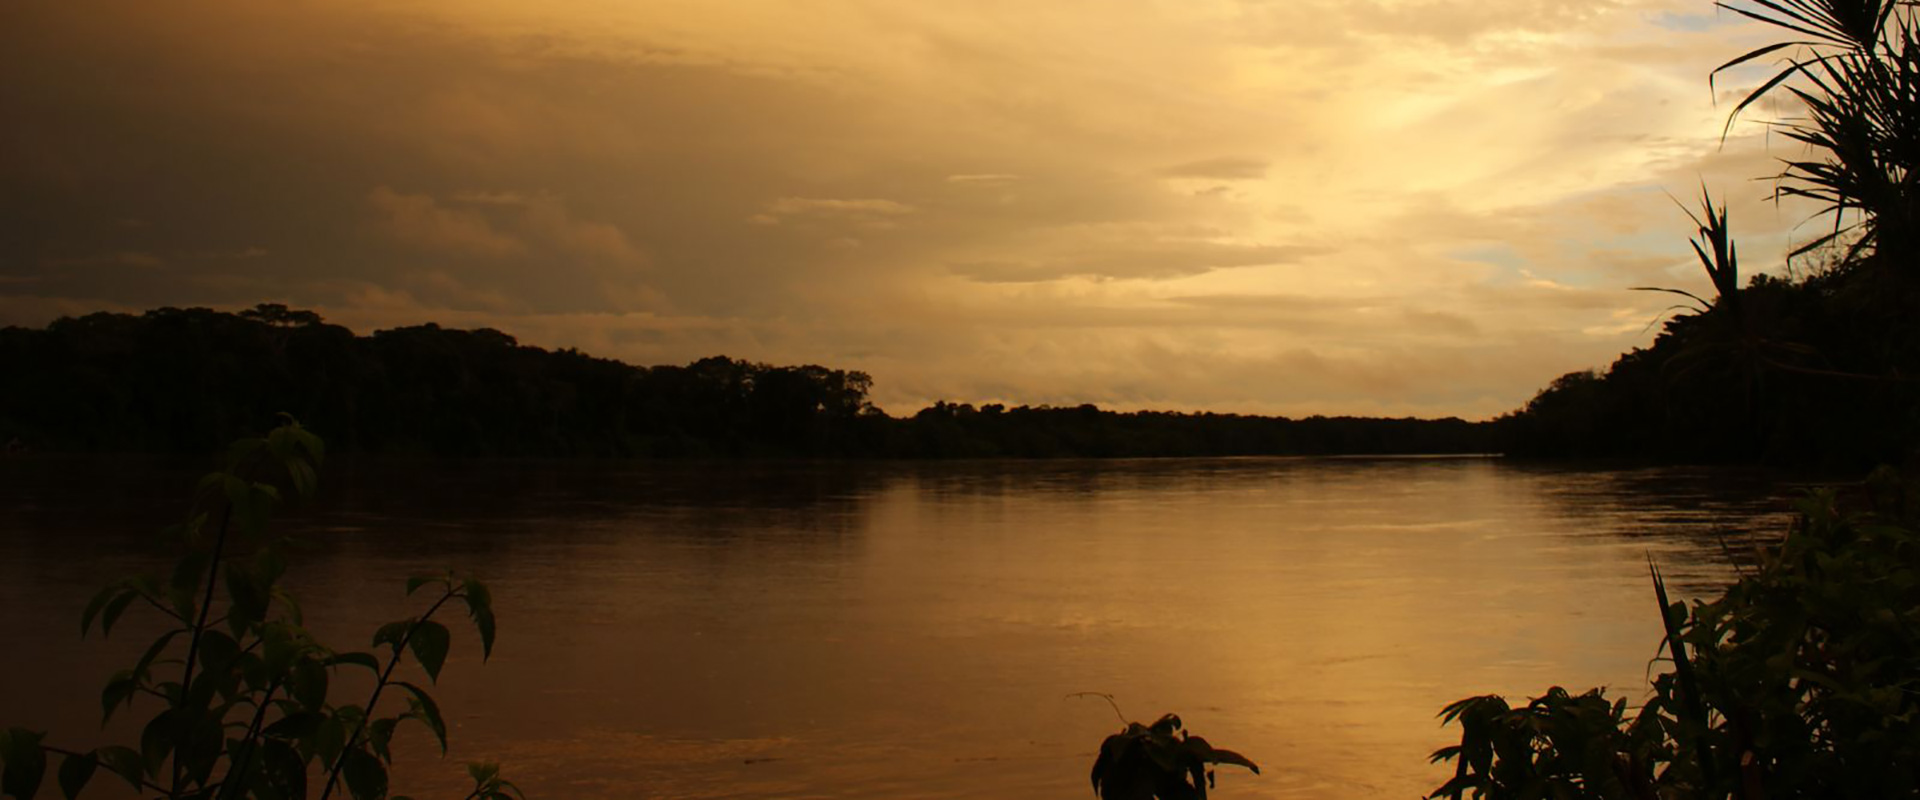 Ecuador Amazon Landscape